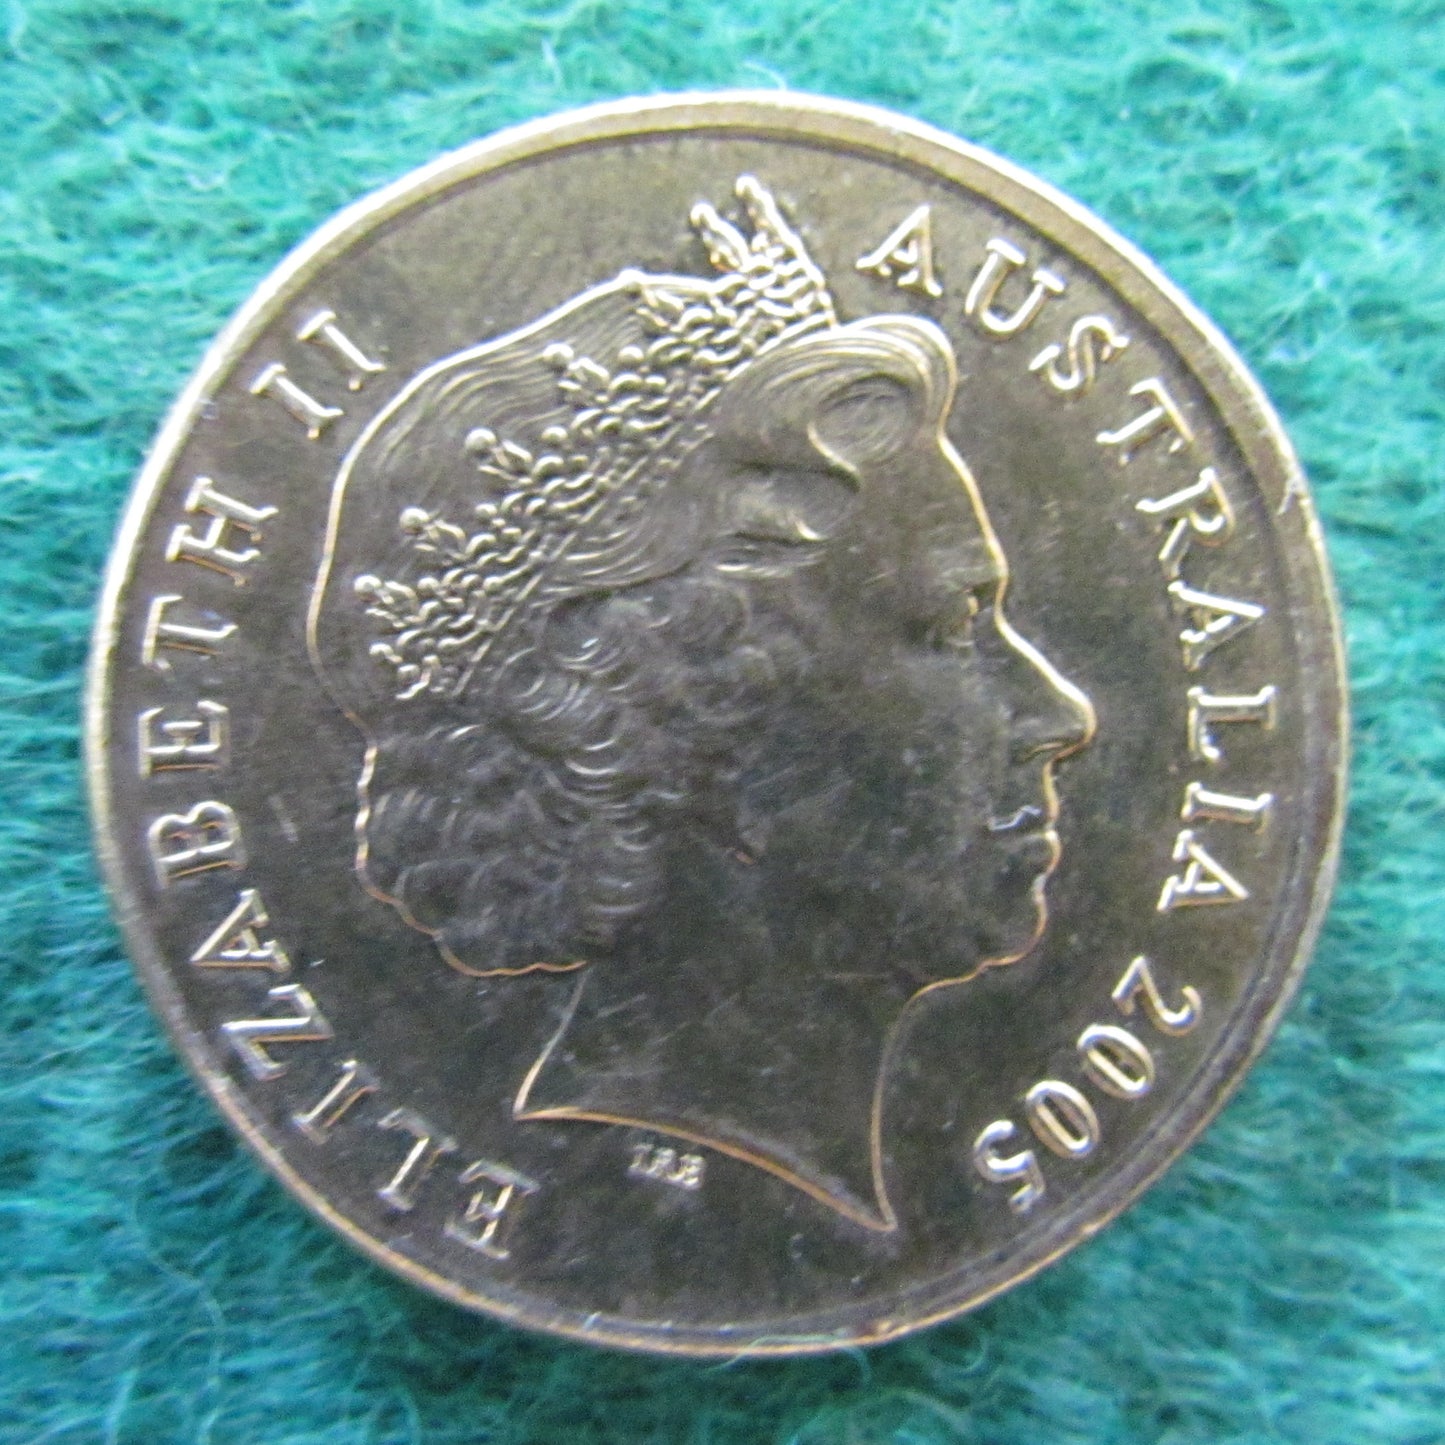 Australian 2005 1 Dollar World War 1939-1945 Peace Queen Elizabeth Coin - Circulated